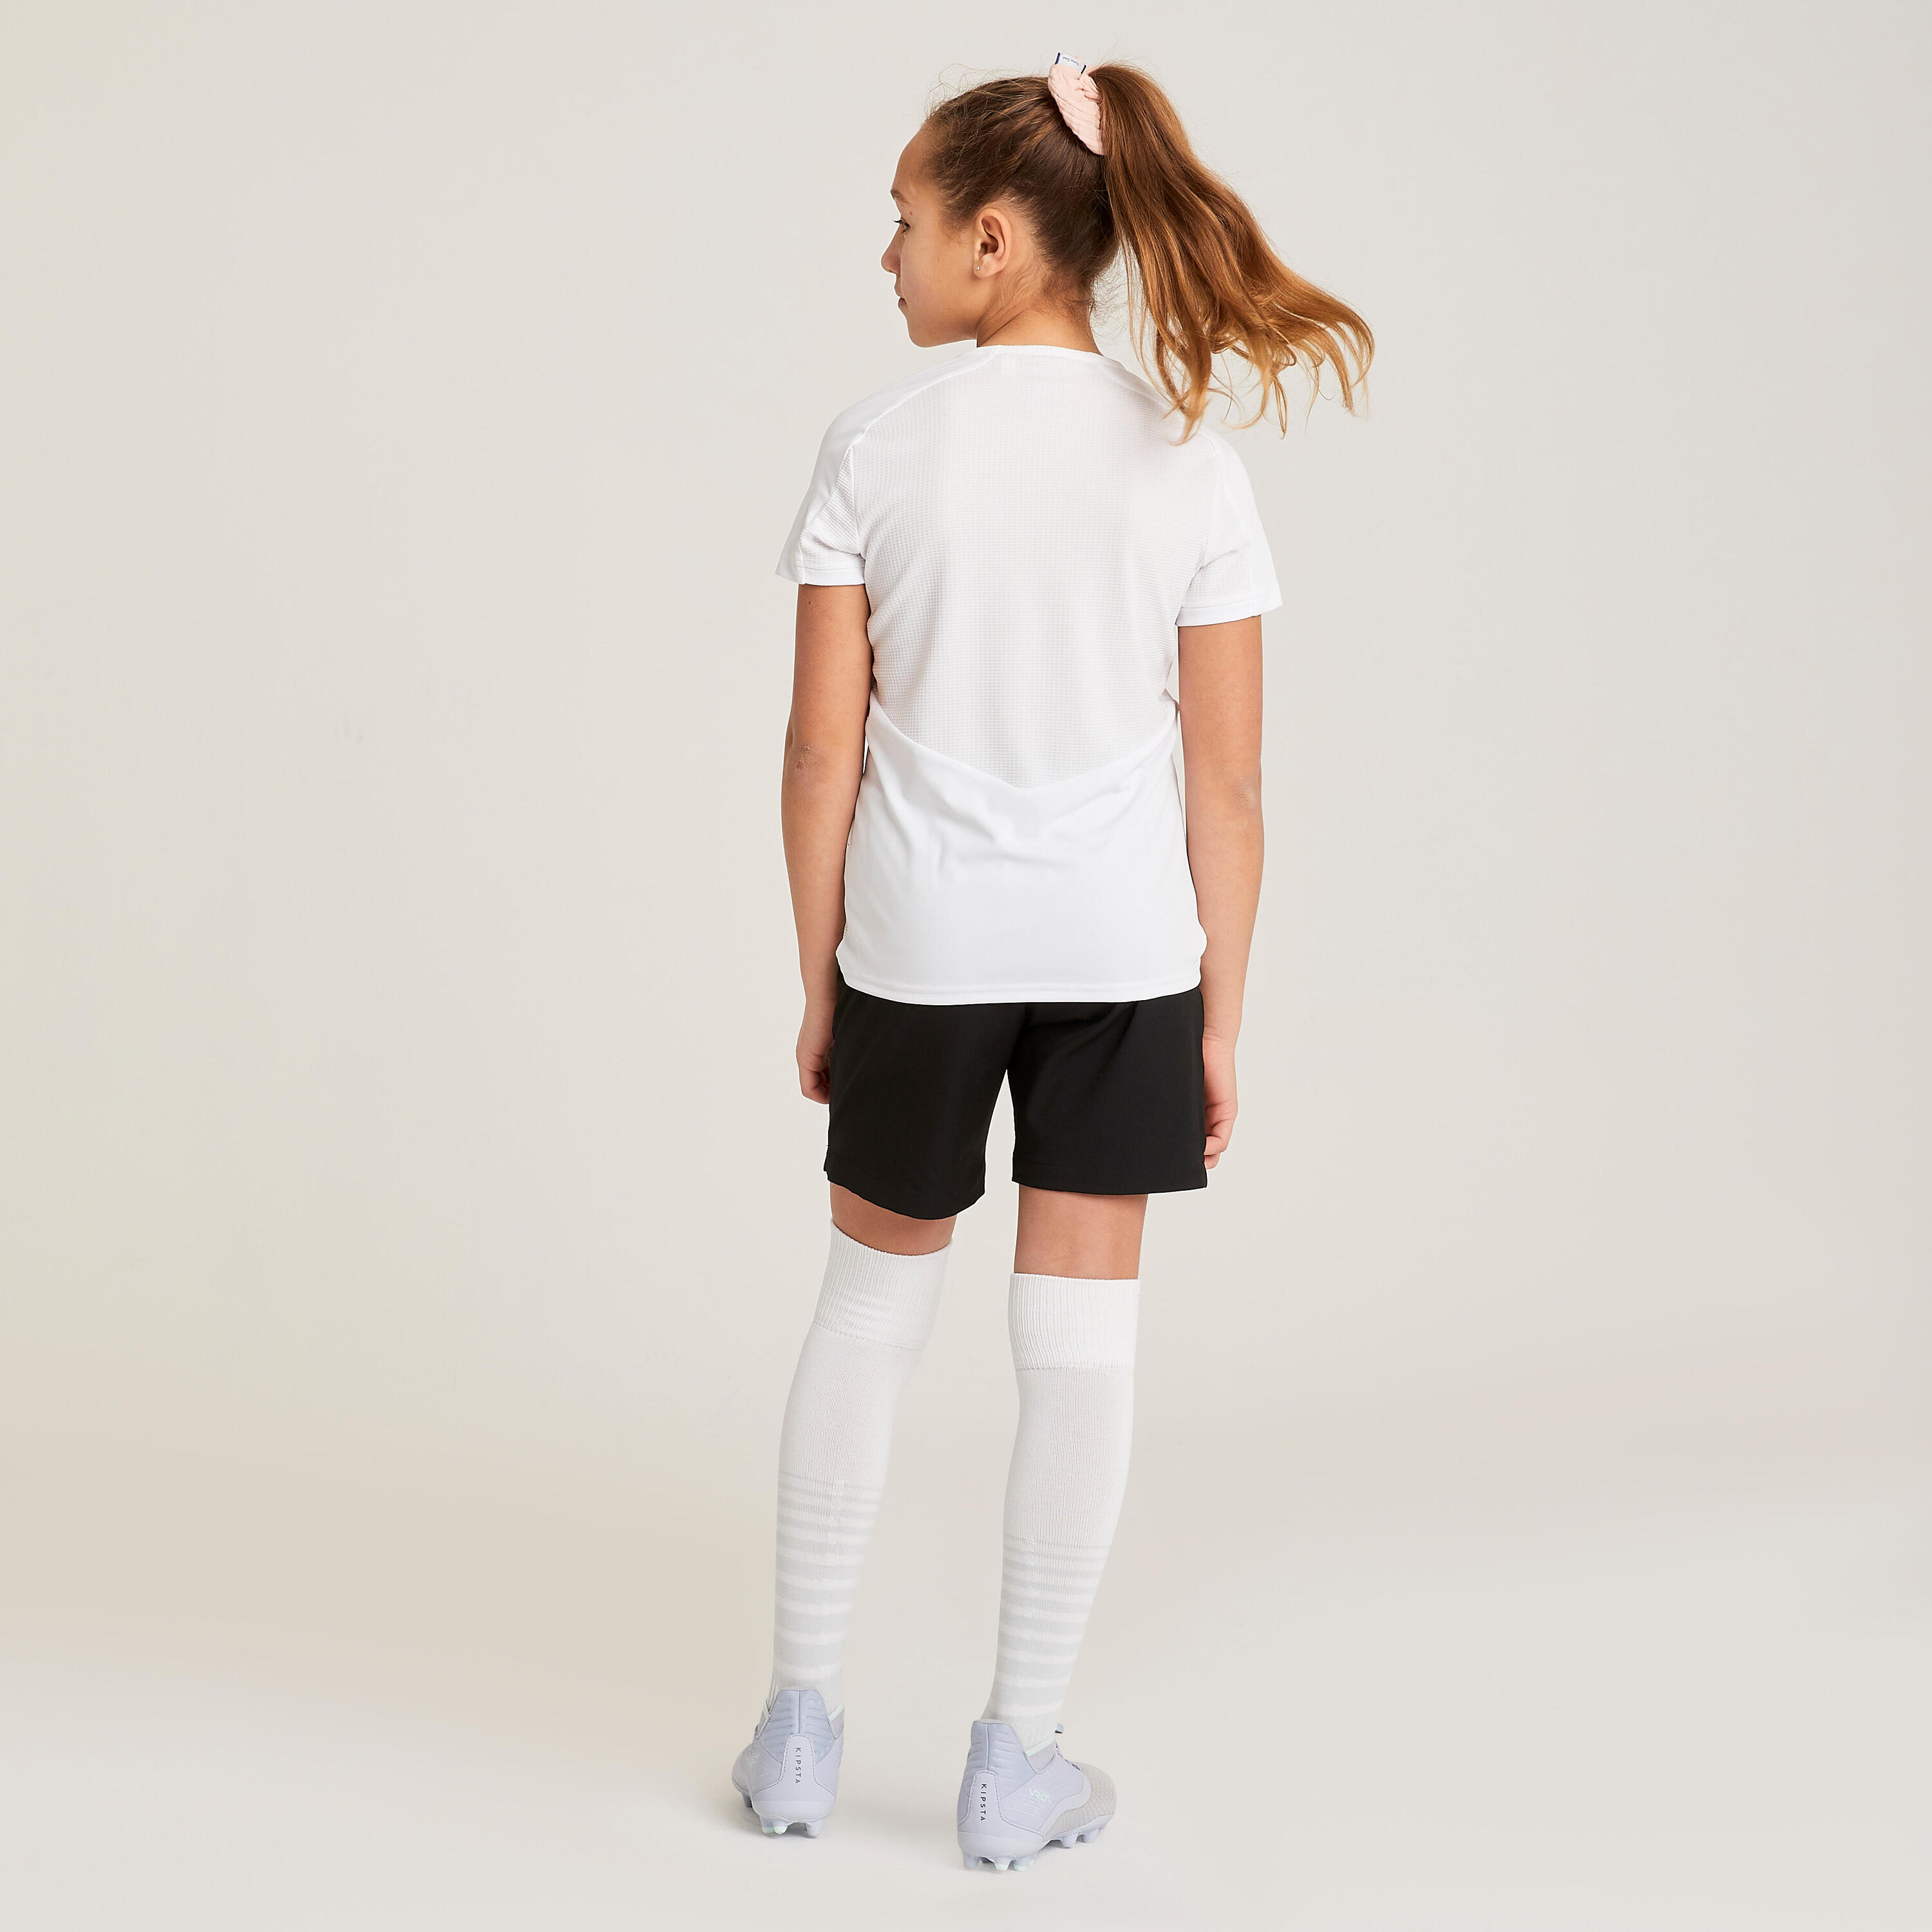 Girls' Football Shirt Viralto - White 10/13